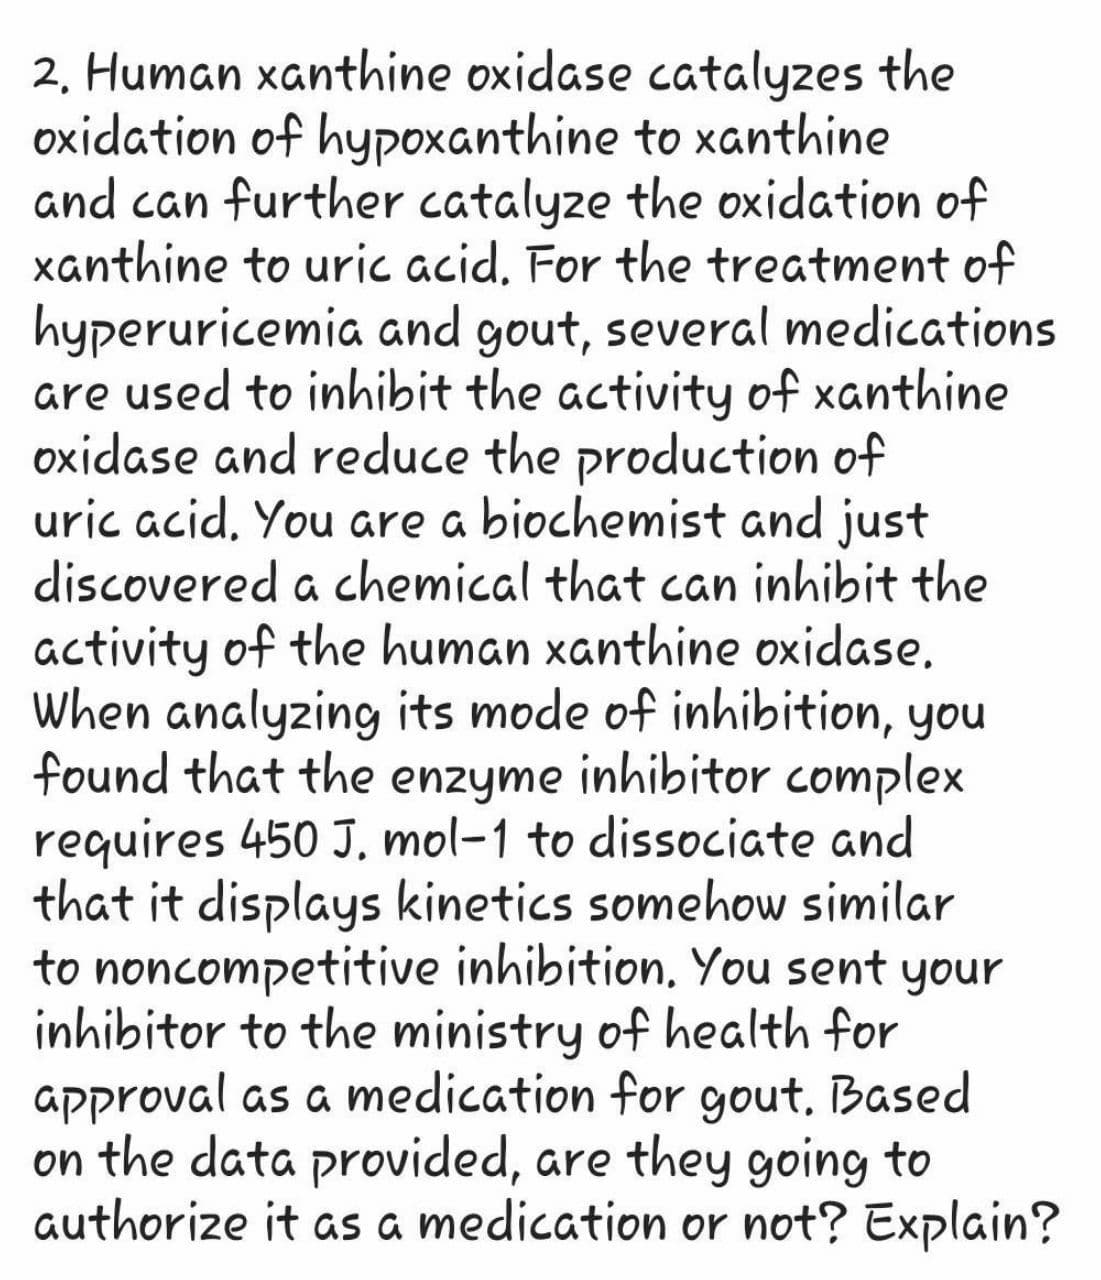 Human xanthine oxidase catalyzes the
idation of hypoxanthine to xanthine
